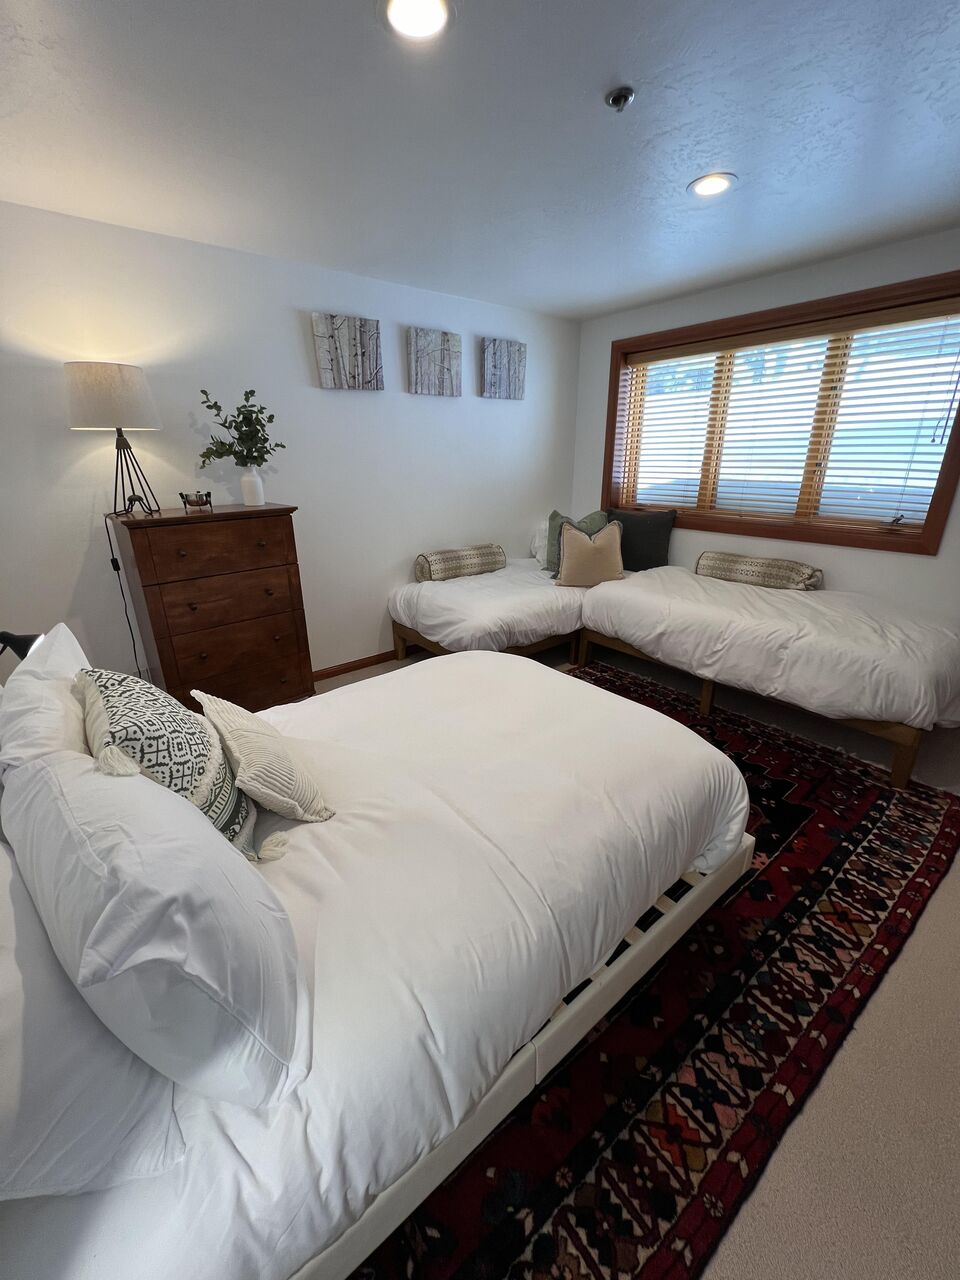 Lounge beds in downstairs bedroom under window